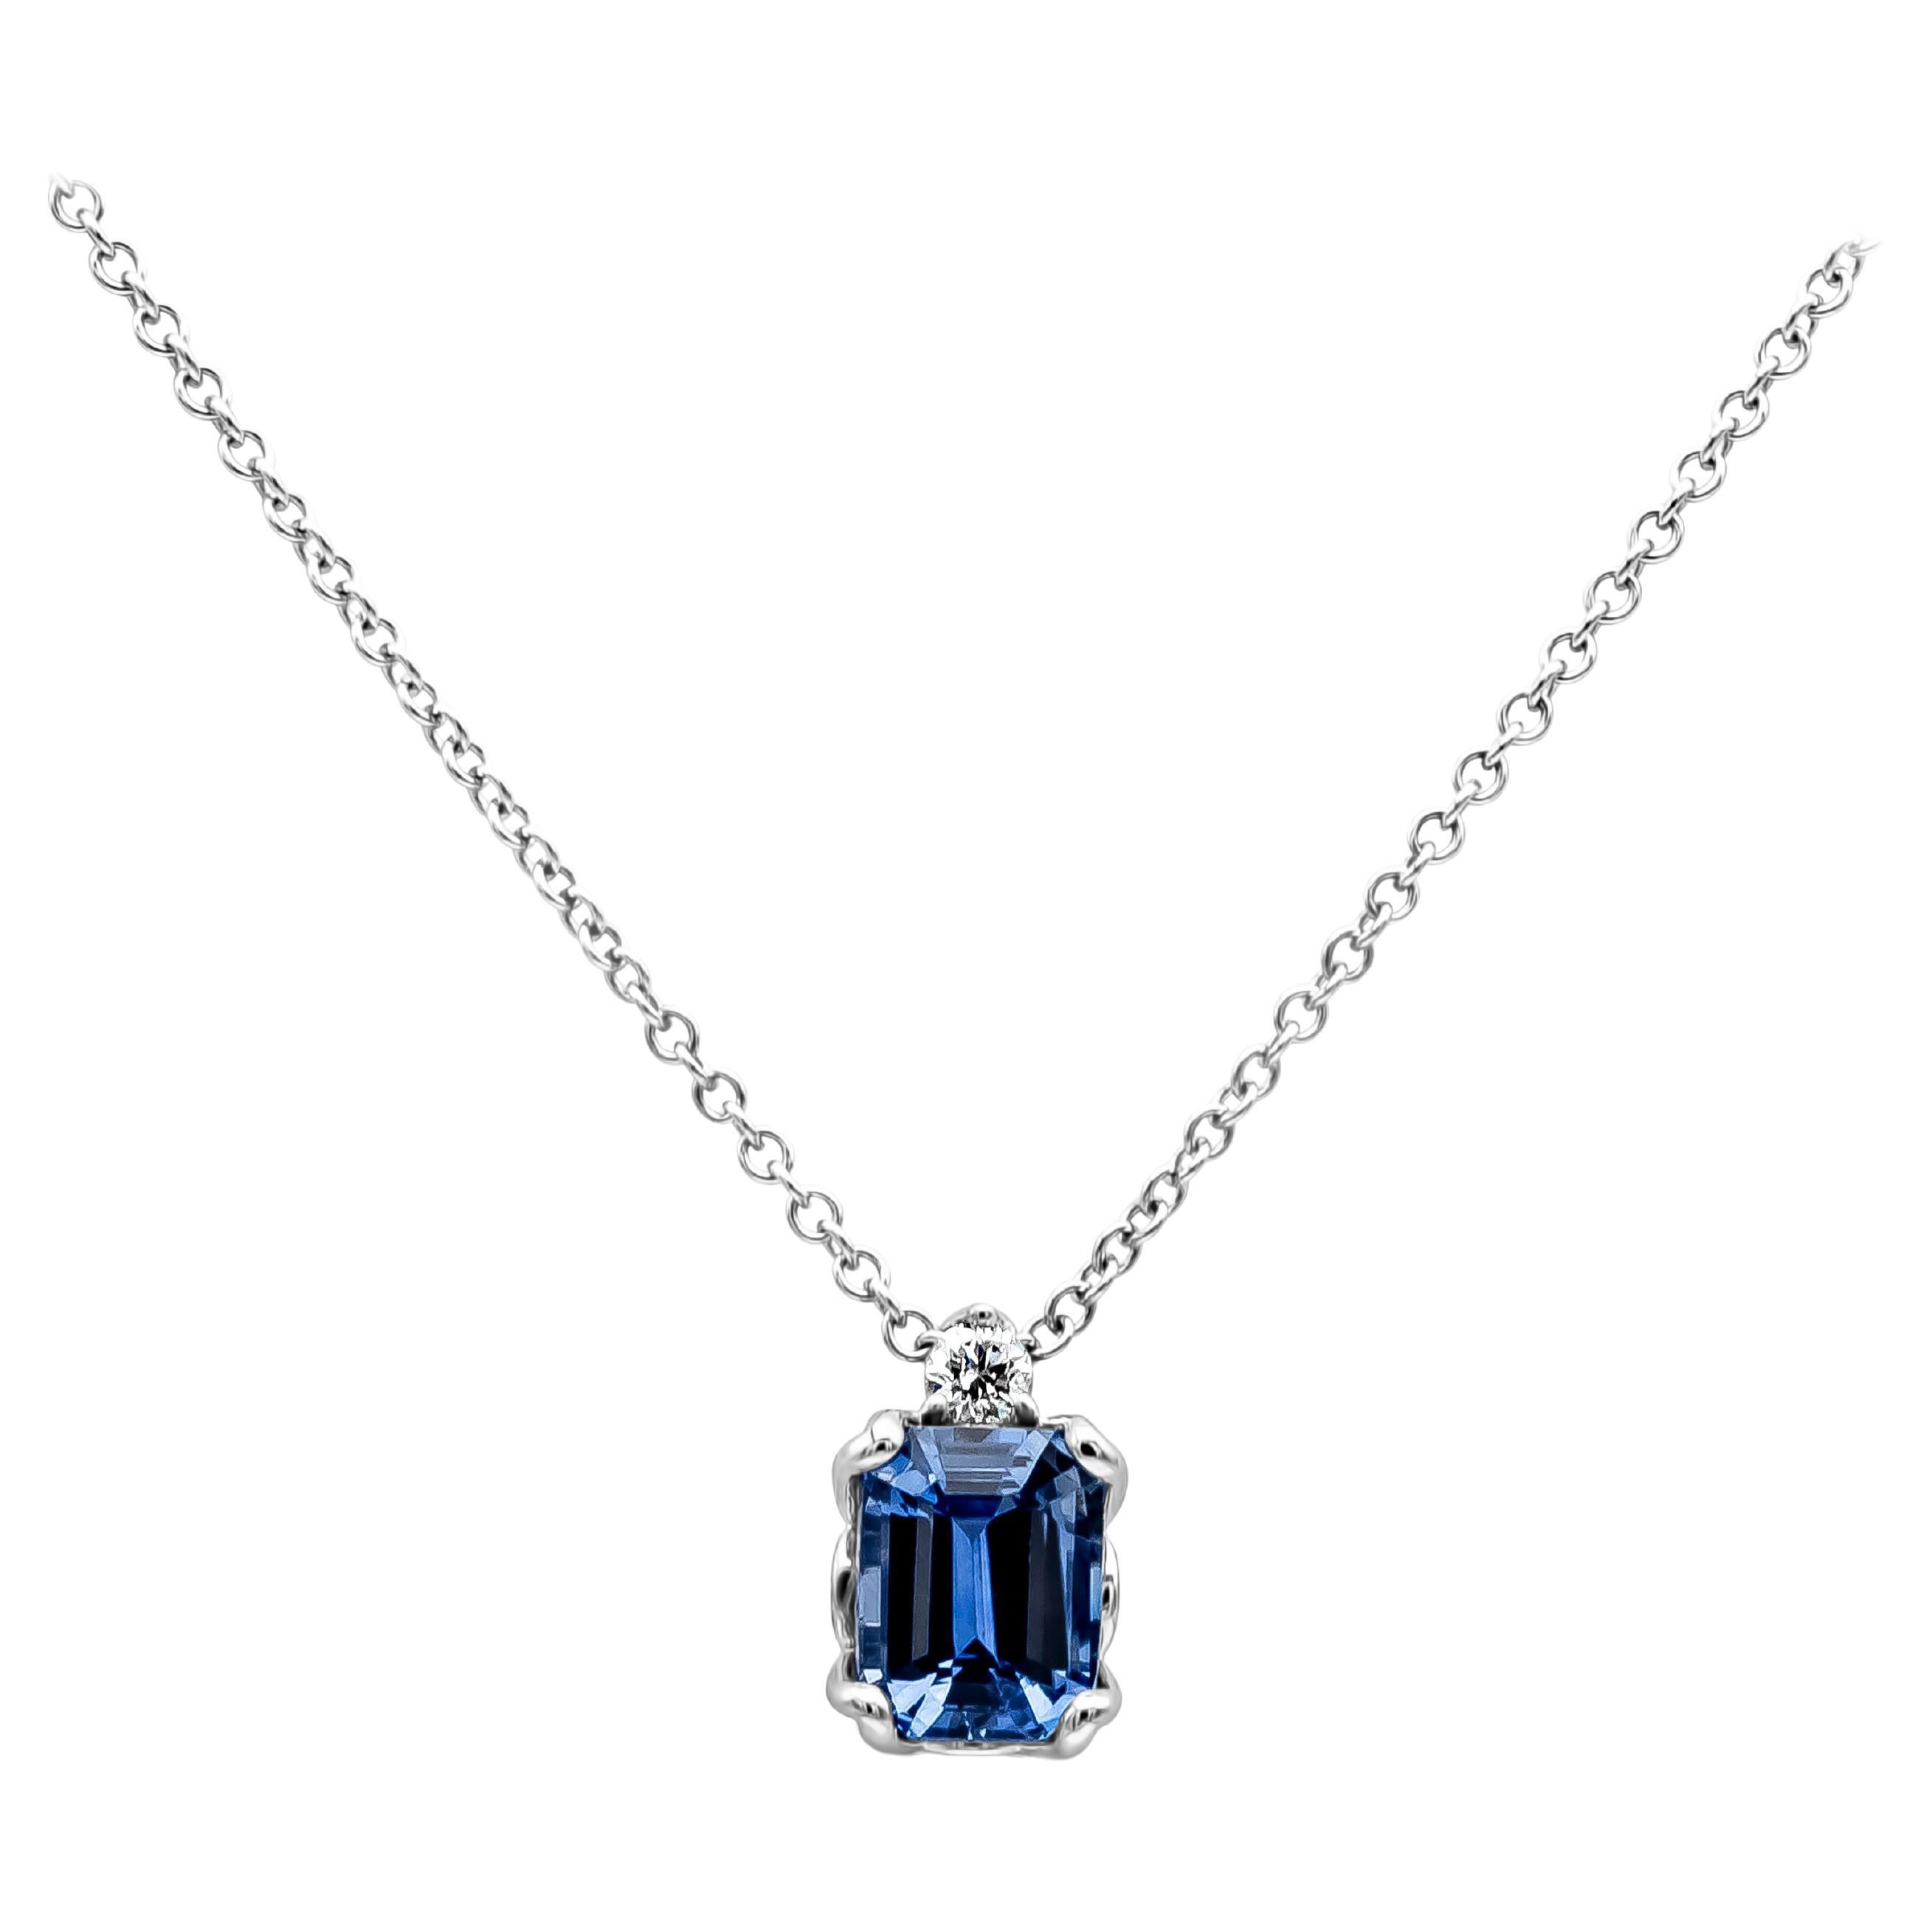 Roman Malakov GIA Certified 2.77 Carat Emerald Cut Sapphire Pendant Necklace For Sale